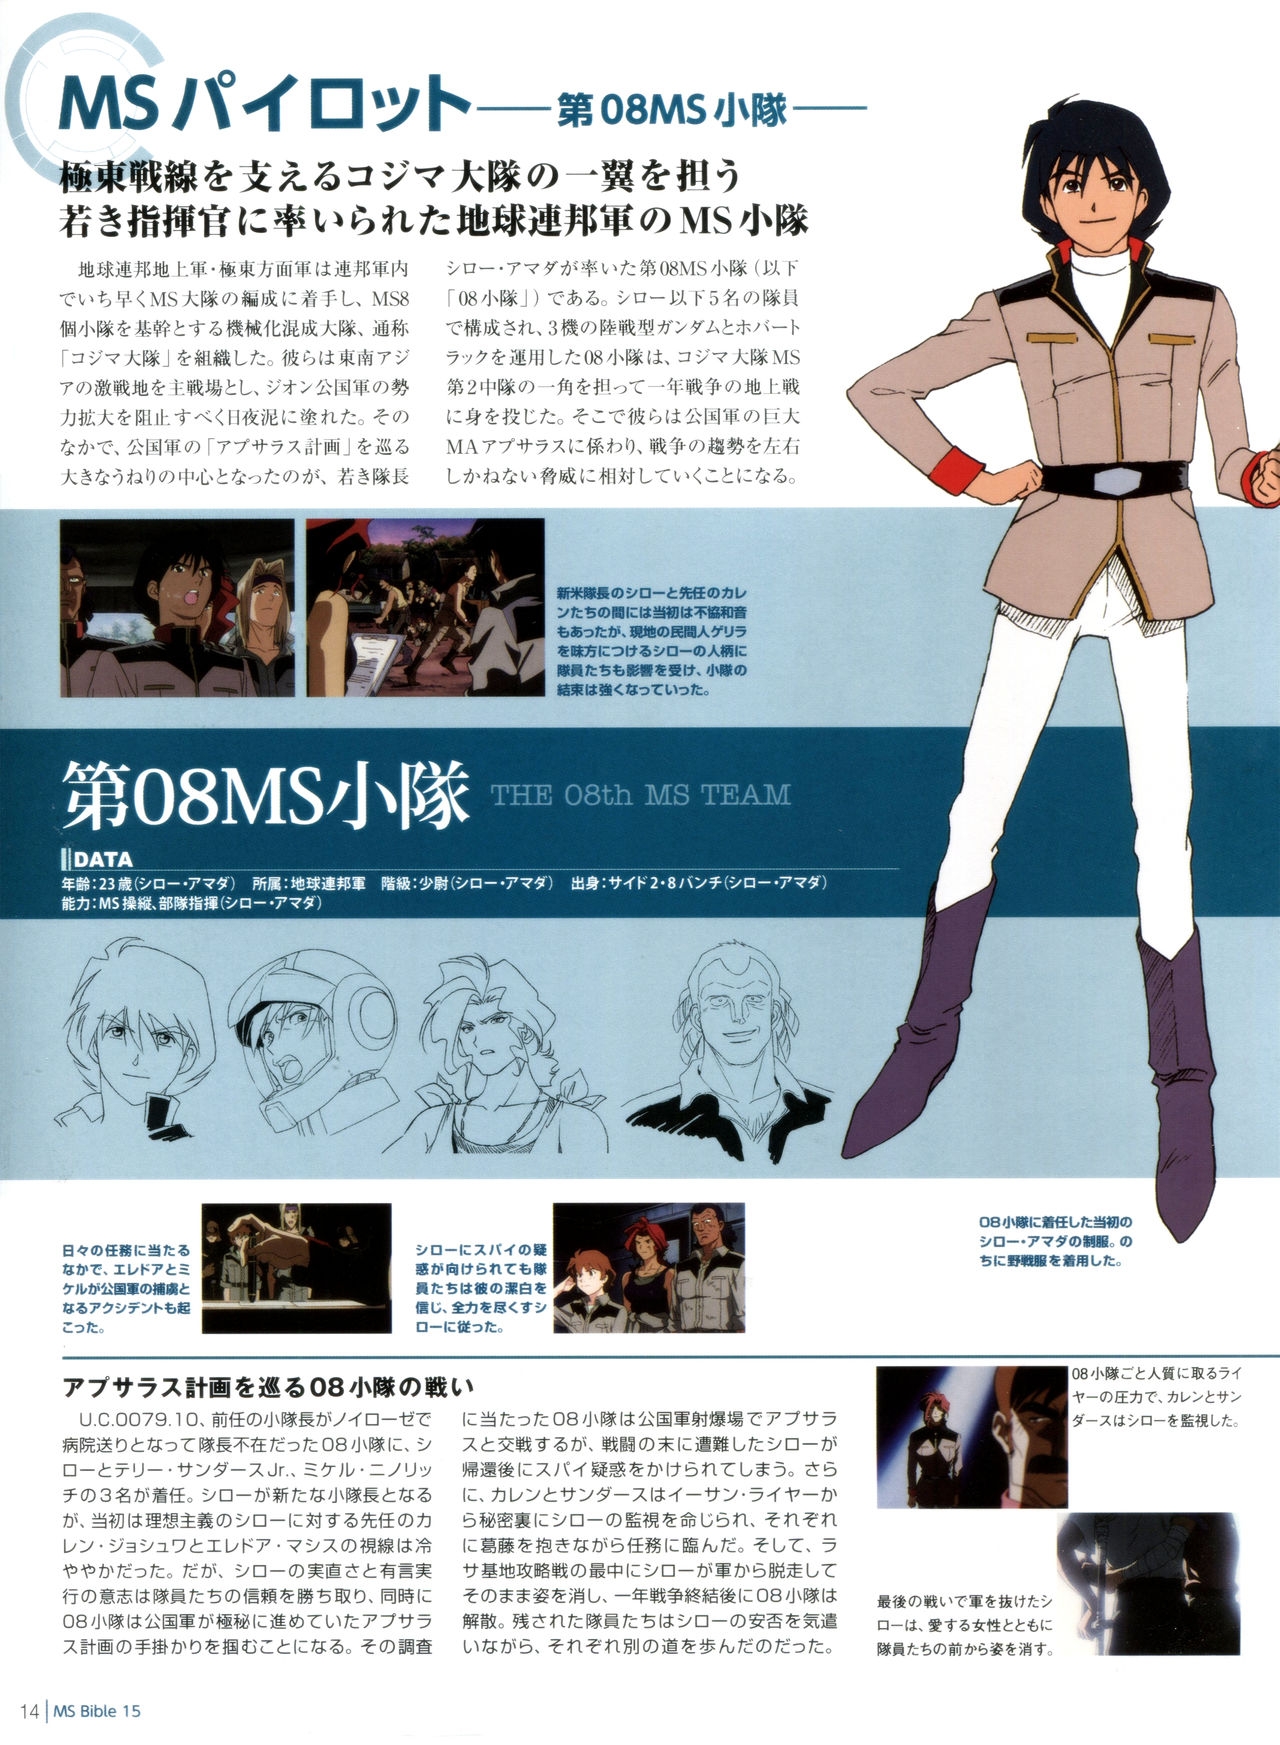 Gundam Mobile Suit Bible 15 15